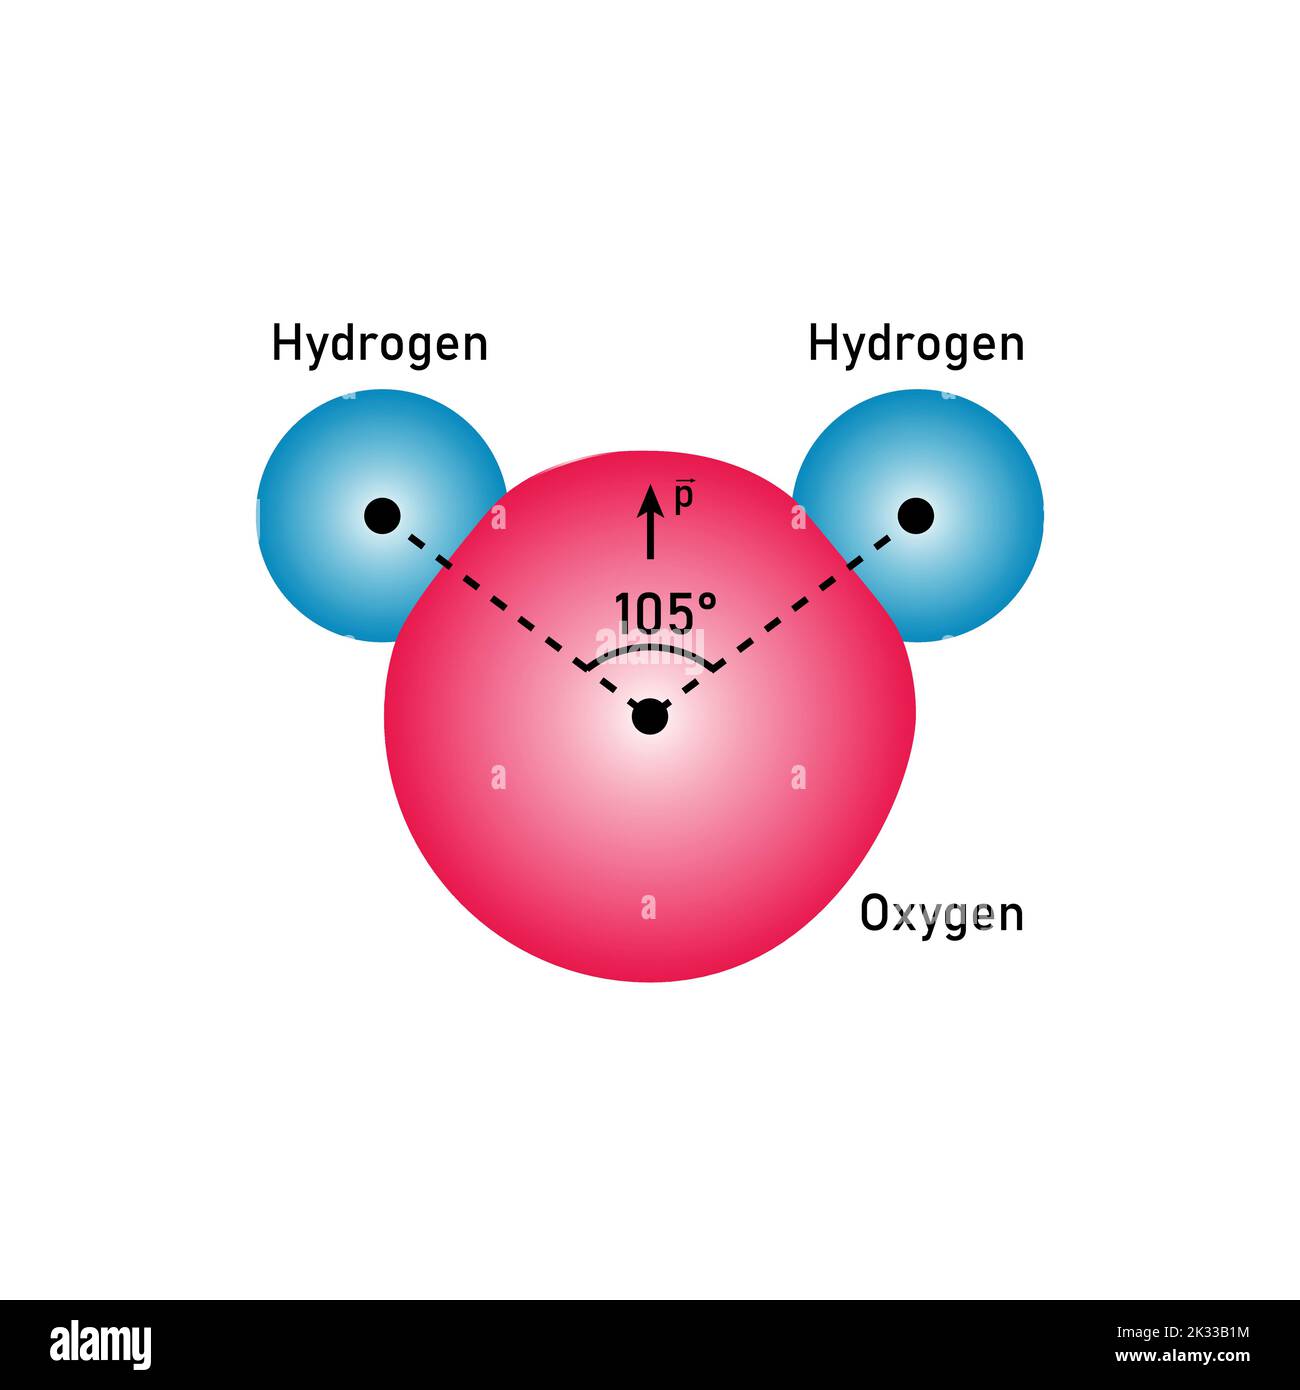 Молекула воды h2o. Молекула воды диполь. H2o молекула воды. Молекула воды представляет собой диполь. Hydrogen Bonds in Water molecules.